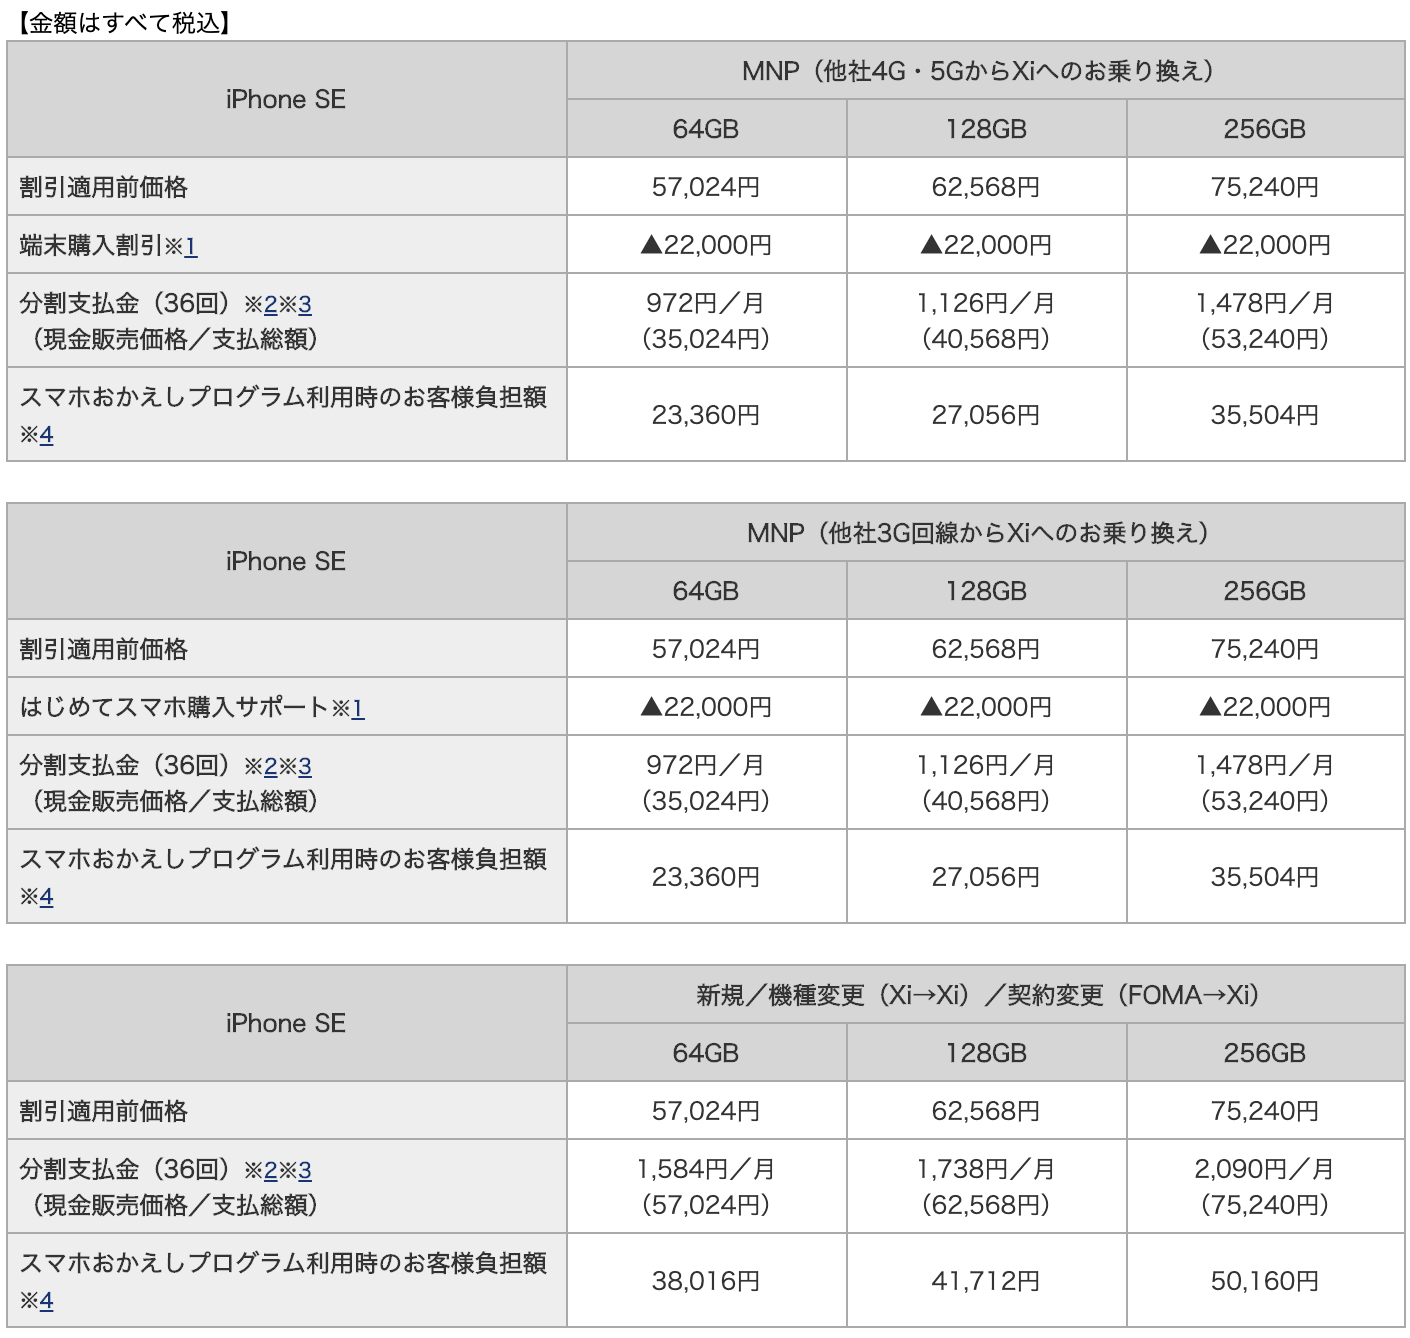 NTTドコモ、｢iPhone SE (第2世代)｣の機種代金を発表 − 予約受付はオンラインでのみに